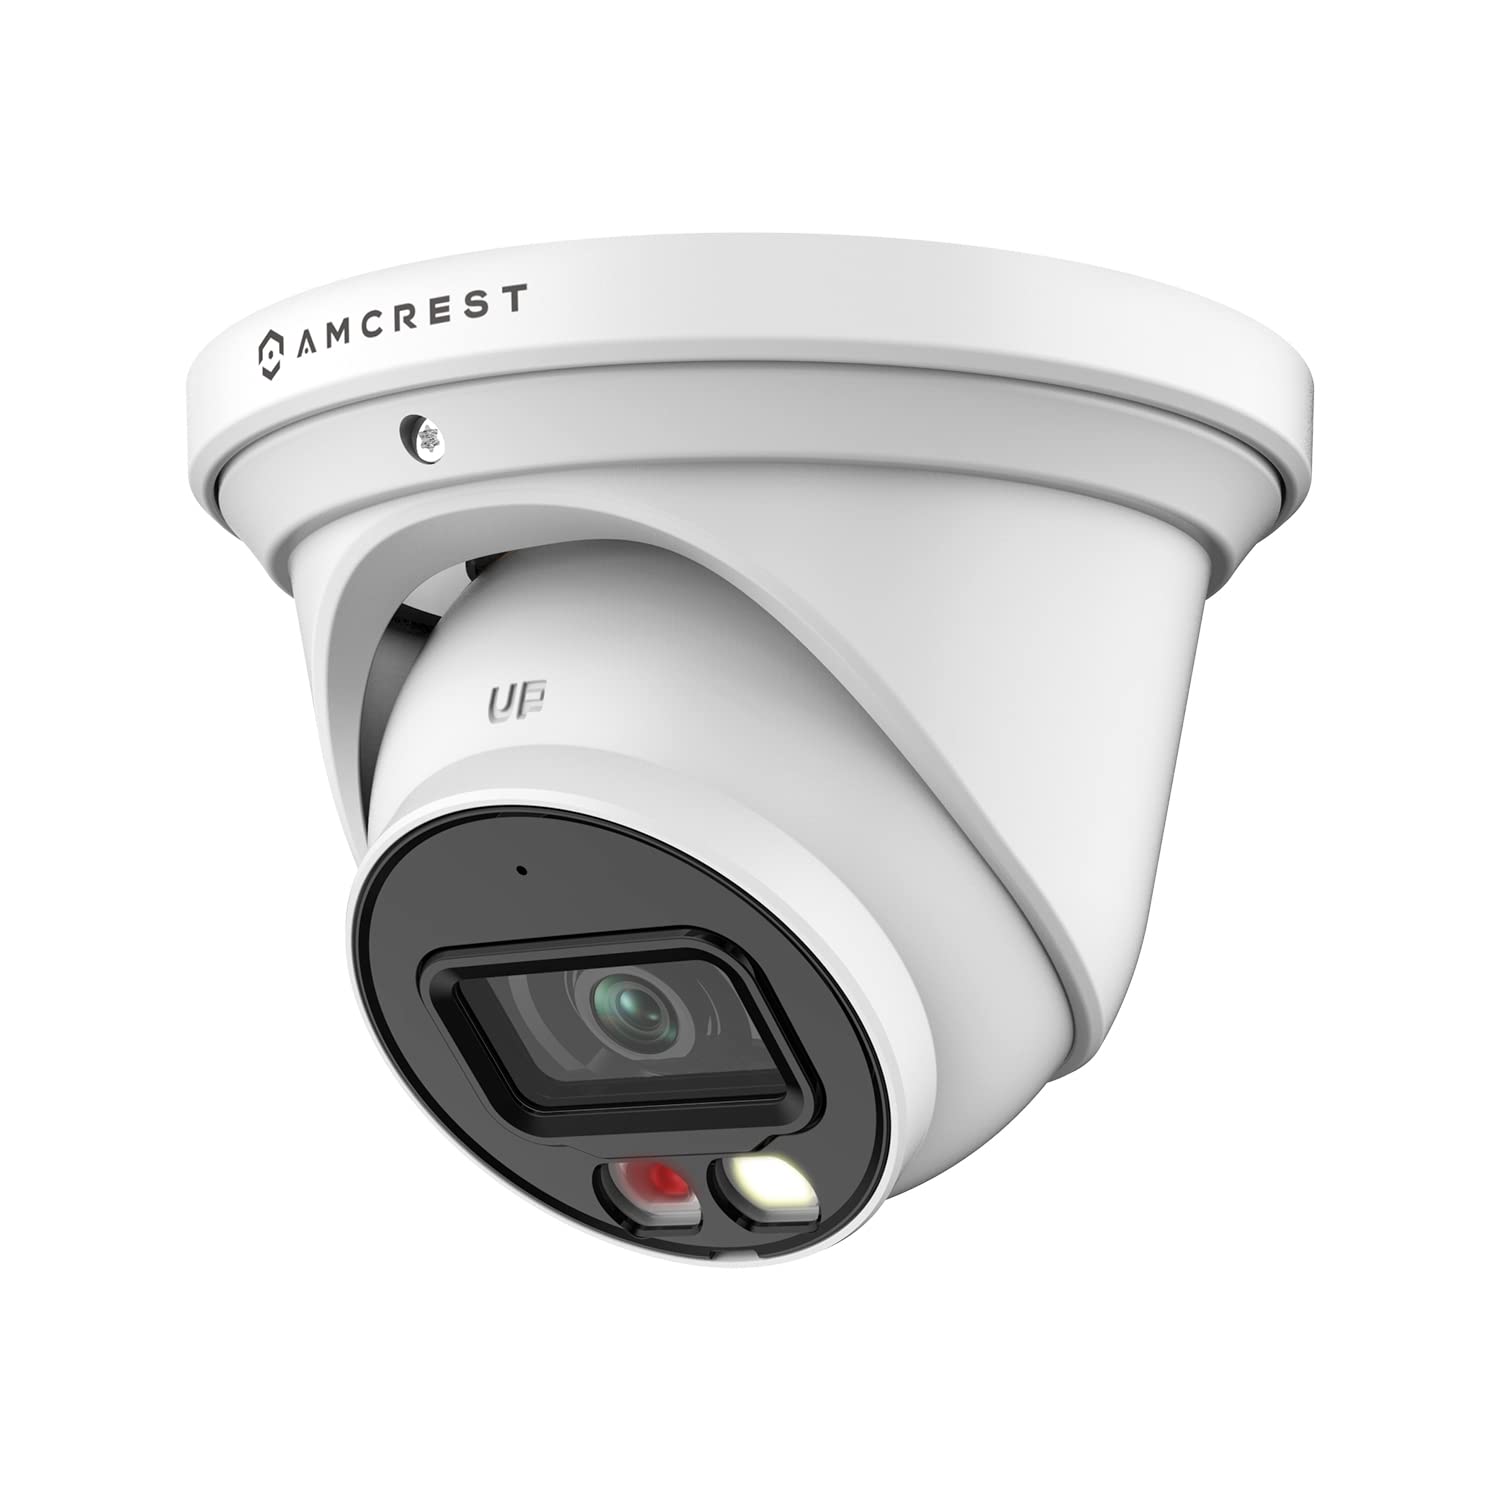 UltraHD 5MP Outdoor Security IP Turret PoE Camera